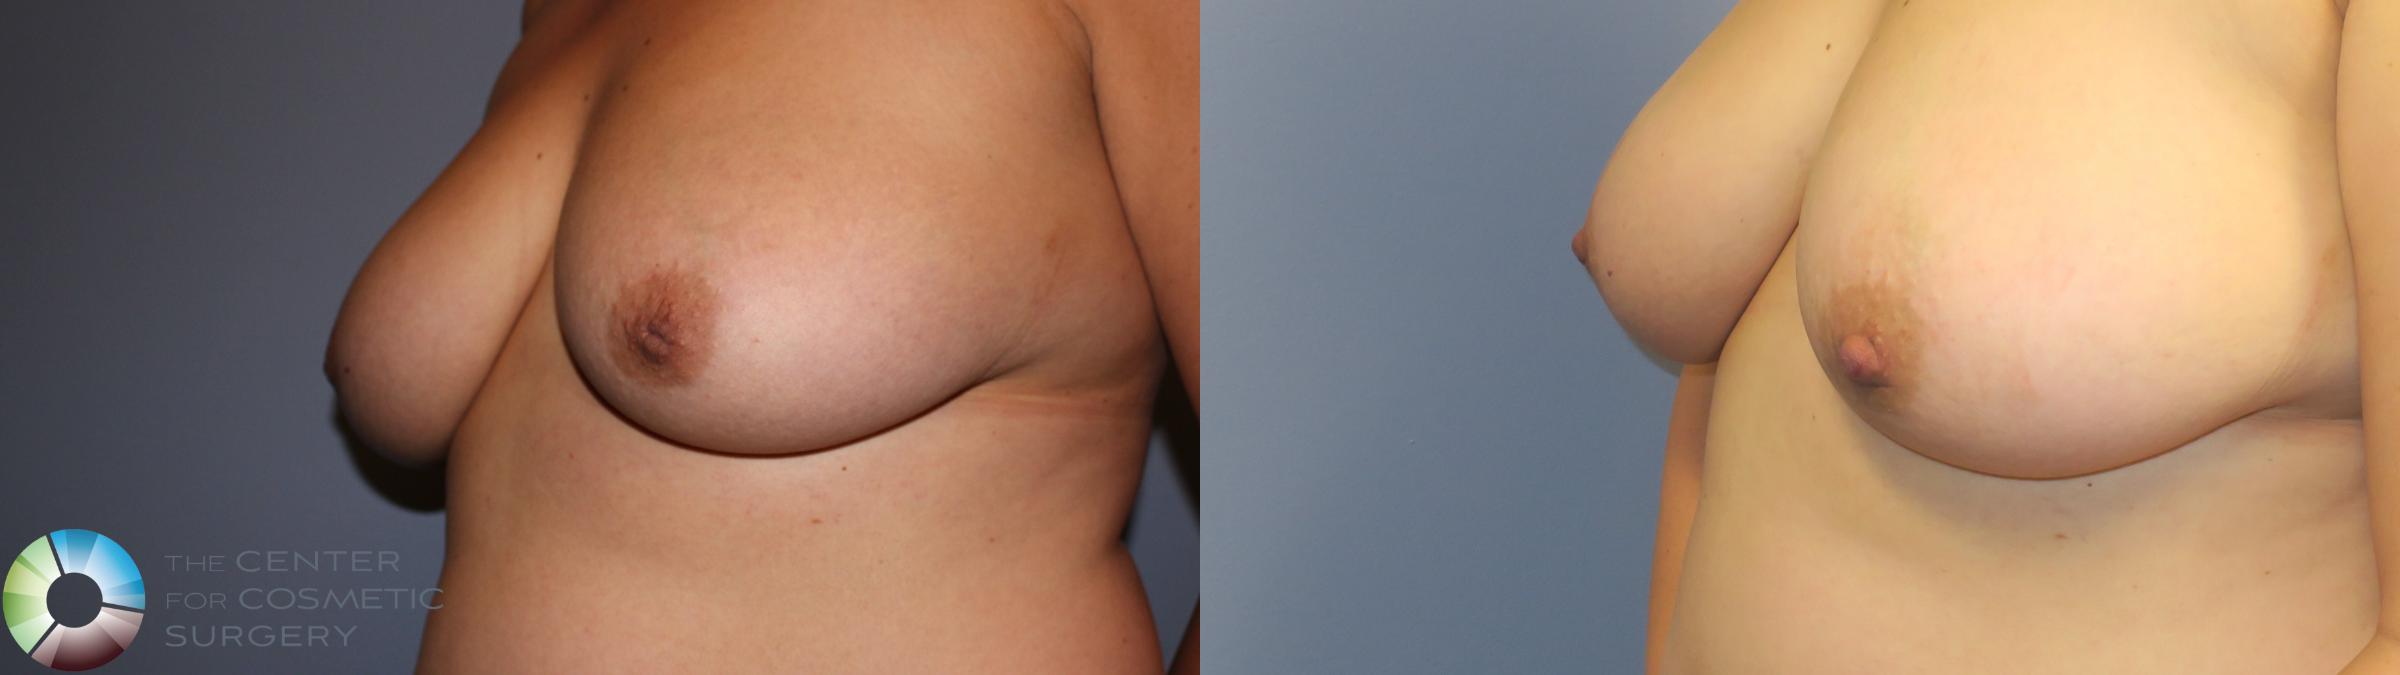 Before & After Inverted Nipple Repair Case 11338 Left Oblique View in Denver & Golden, CO